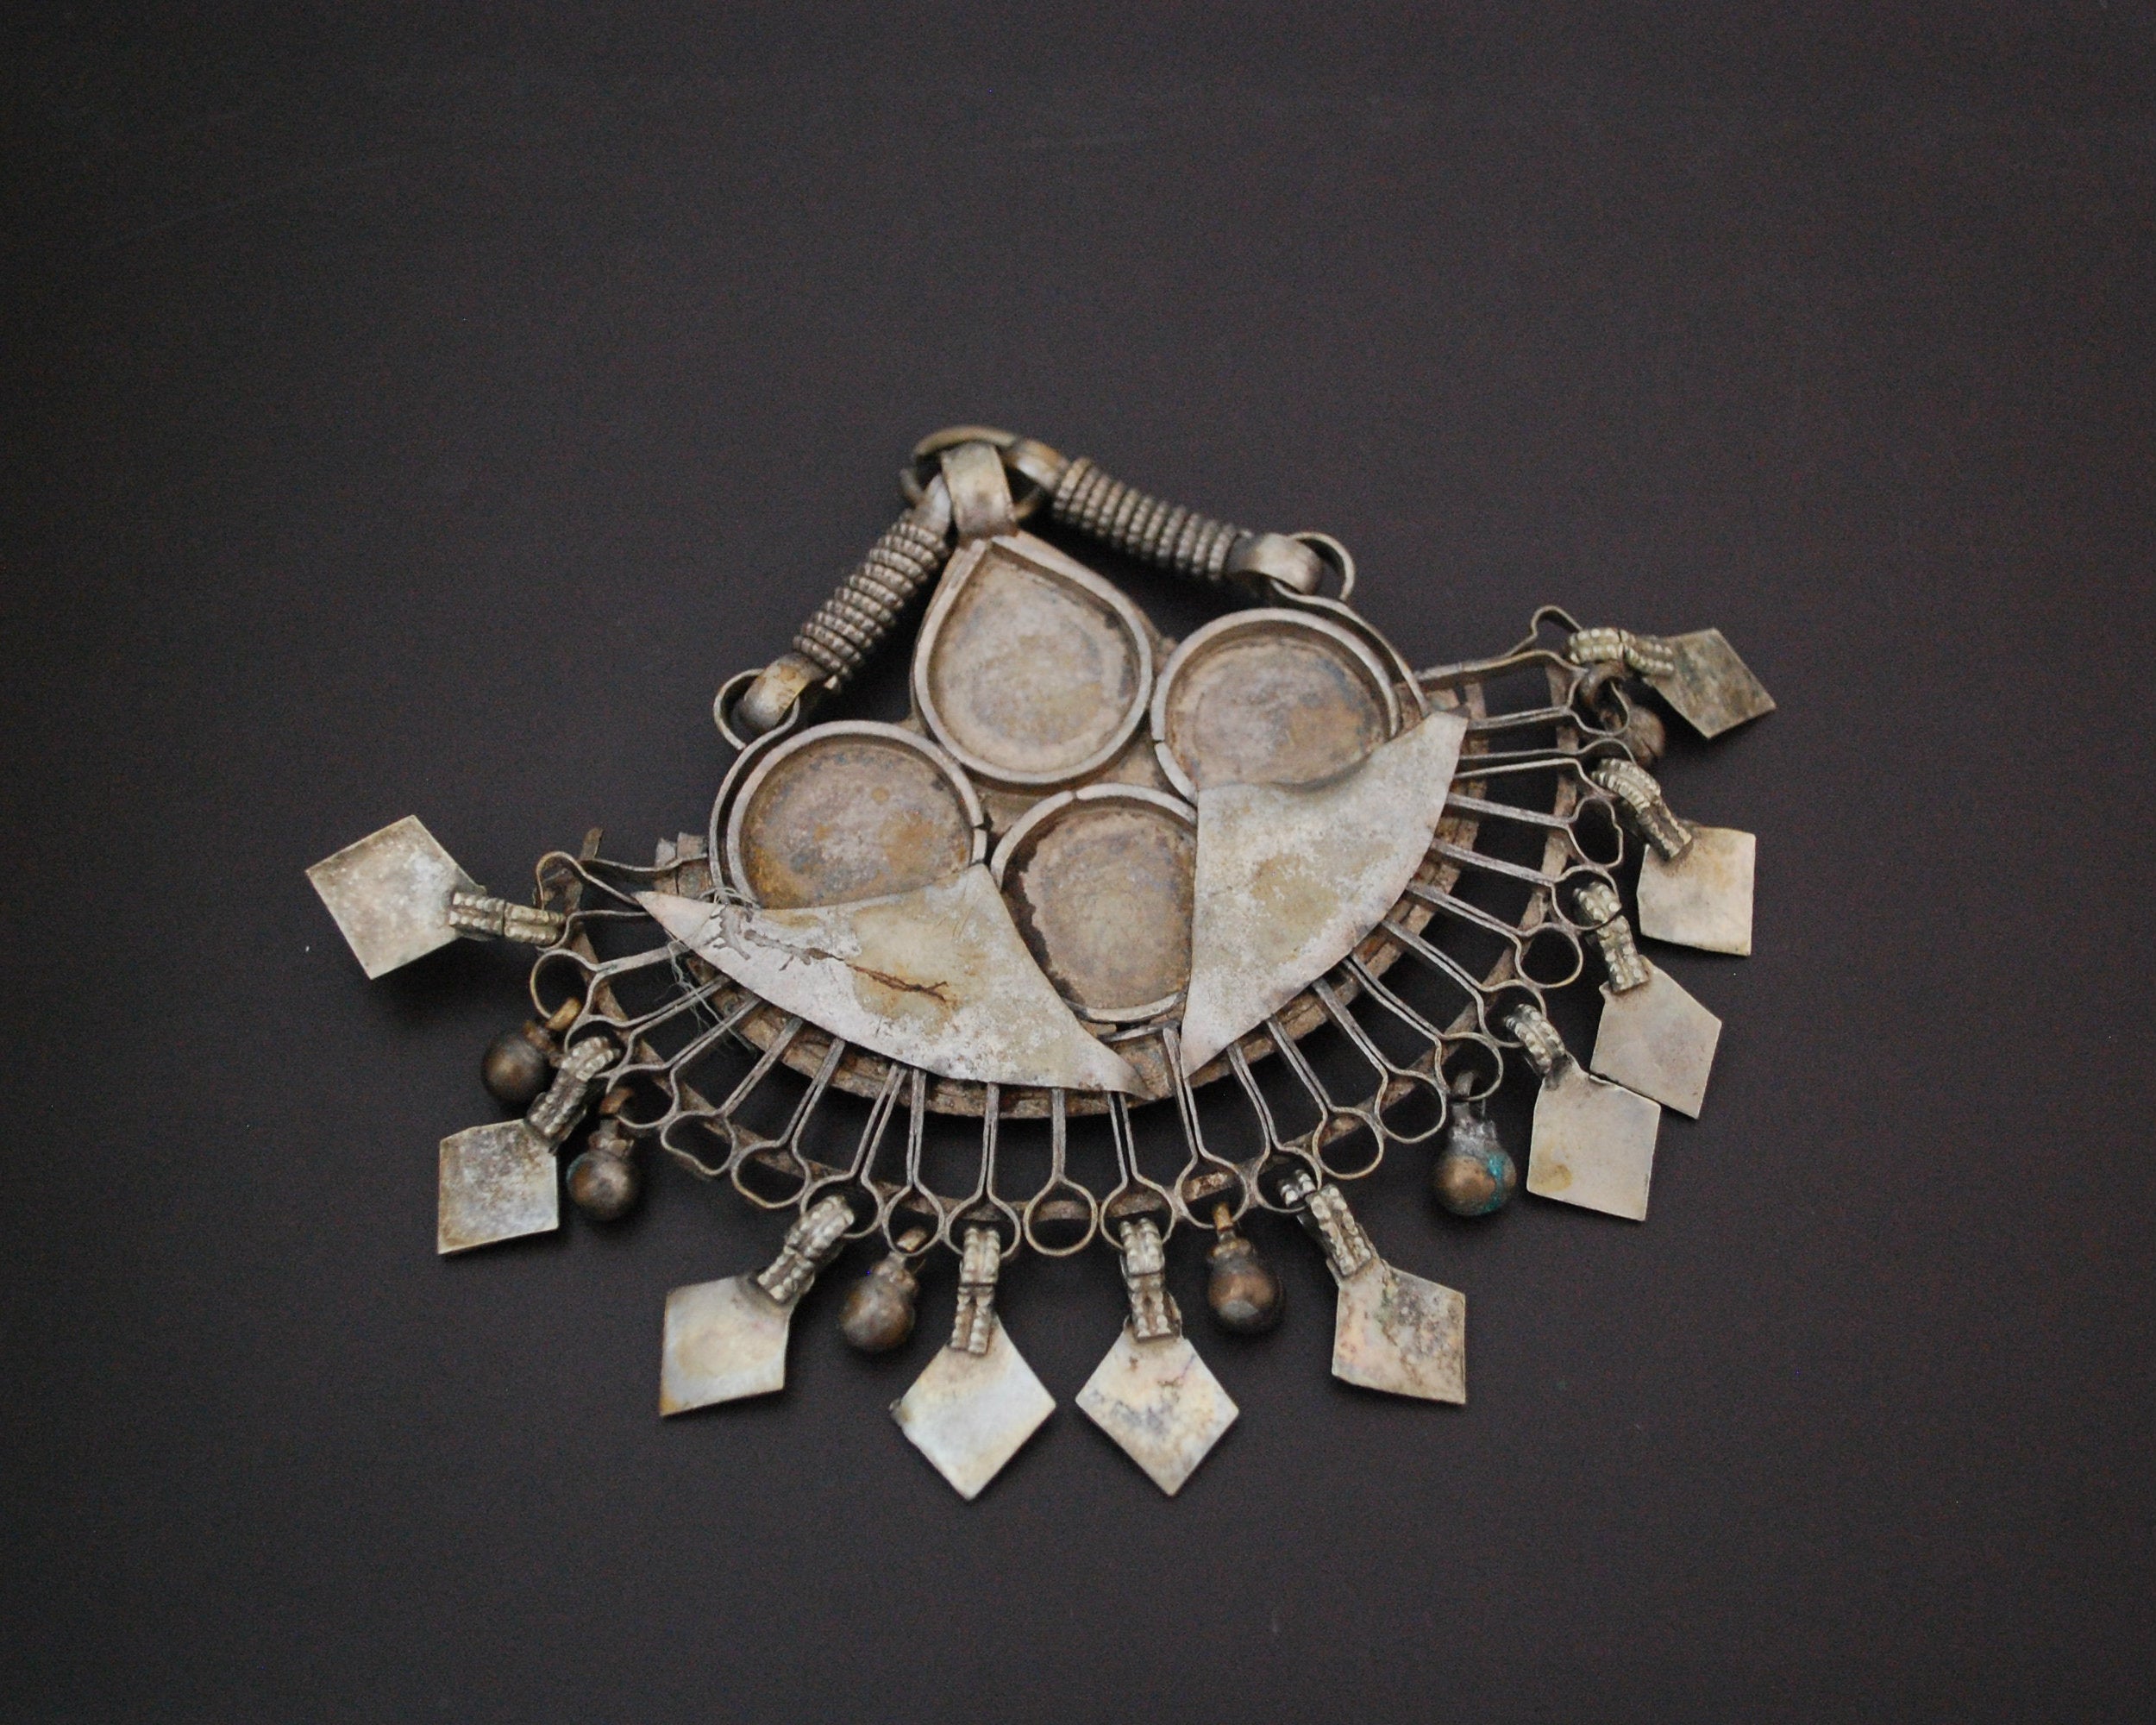 Tribal Rajasthani Glass Pendant or Ornament